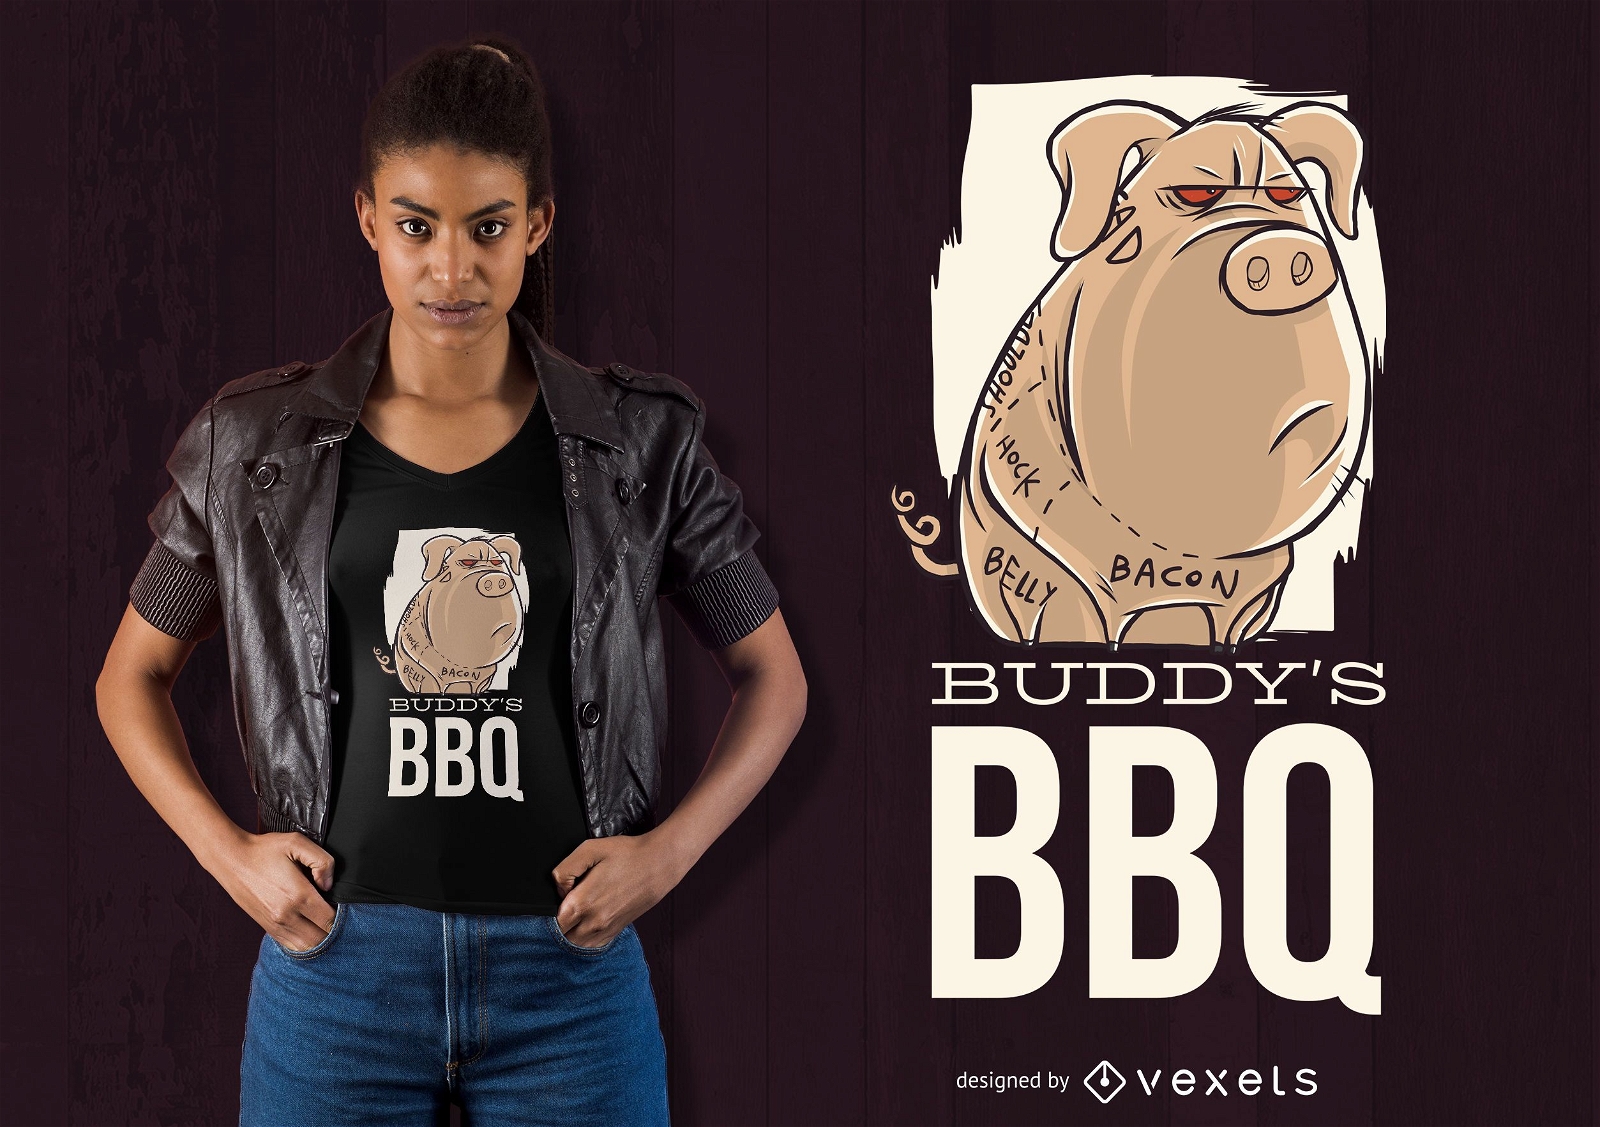 Buddy's BBQ t-shirt design